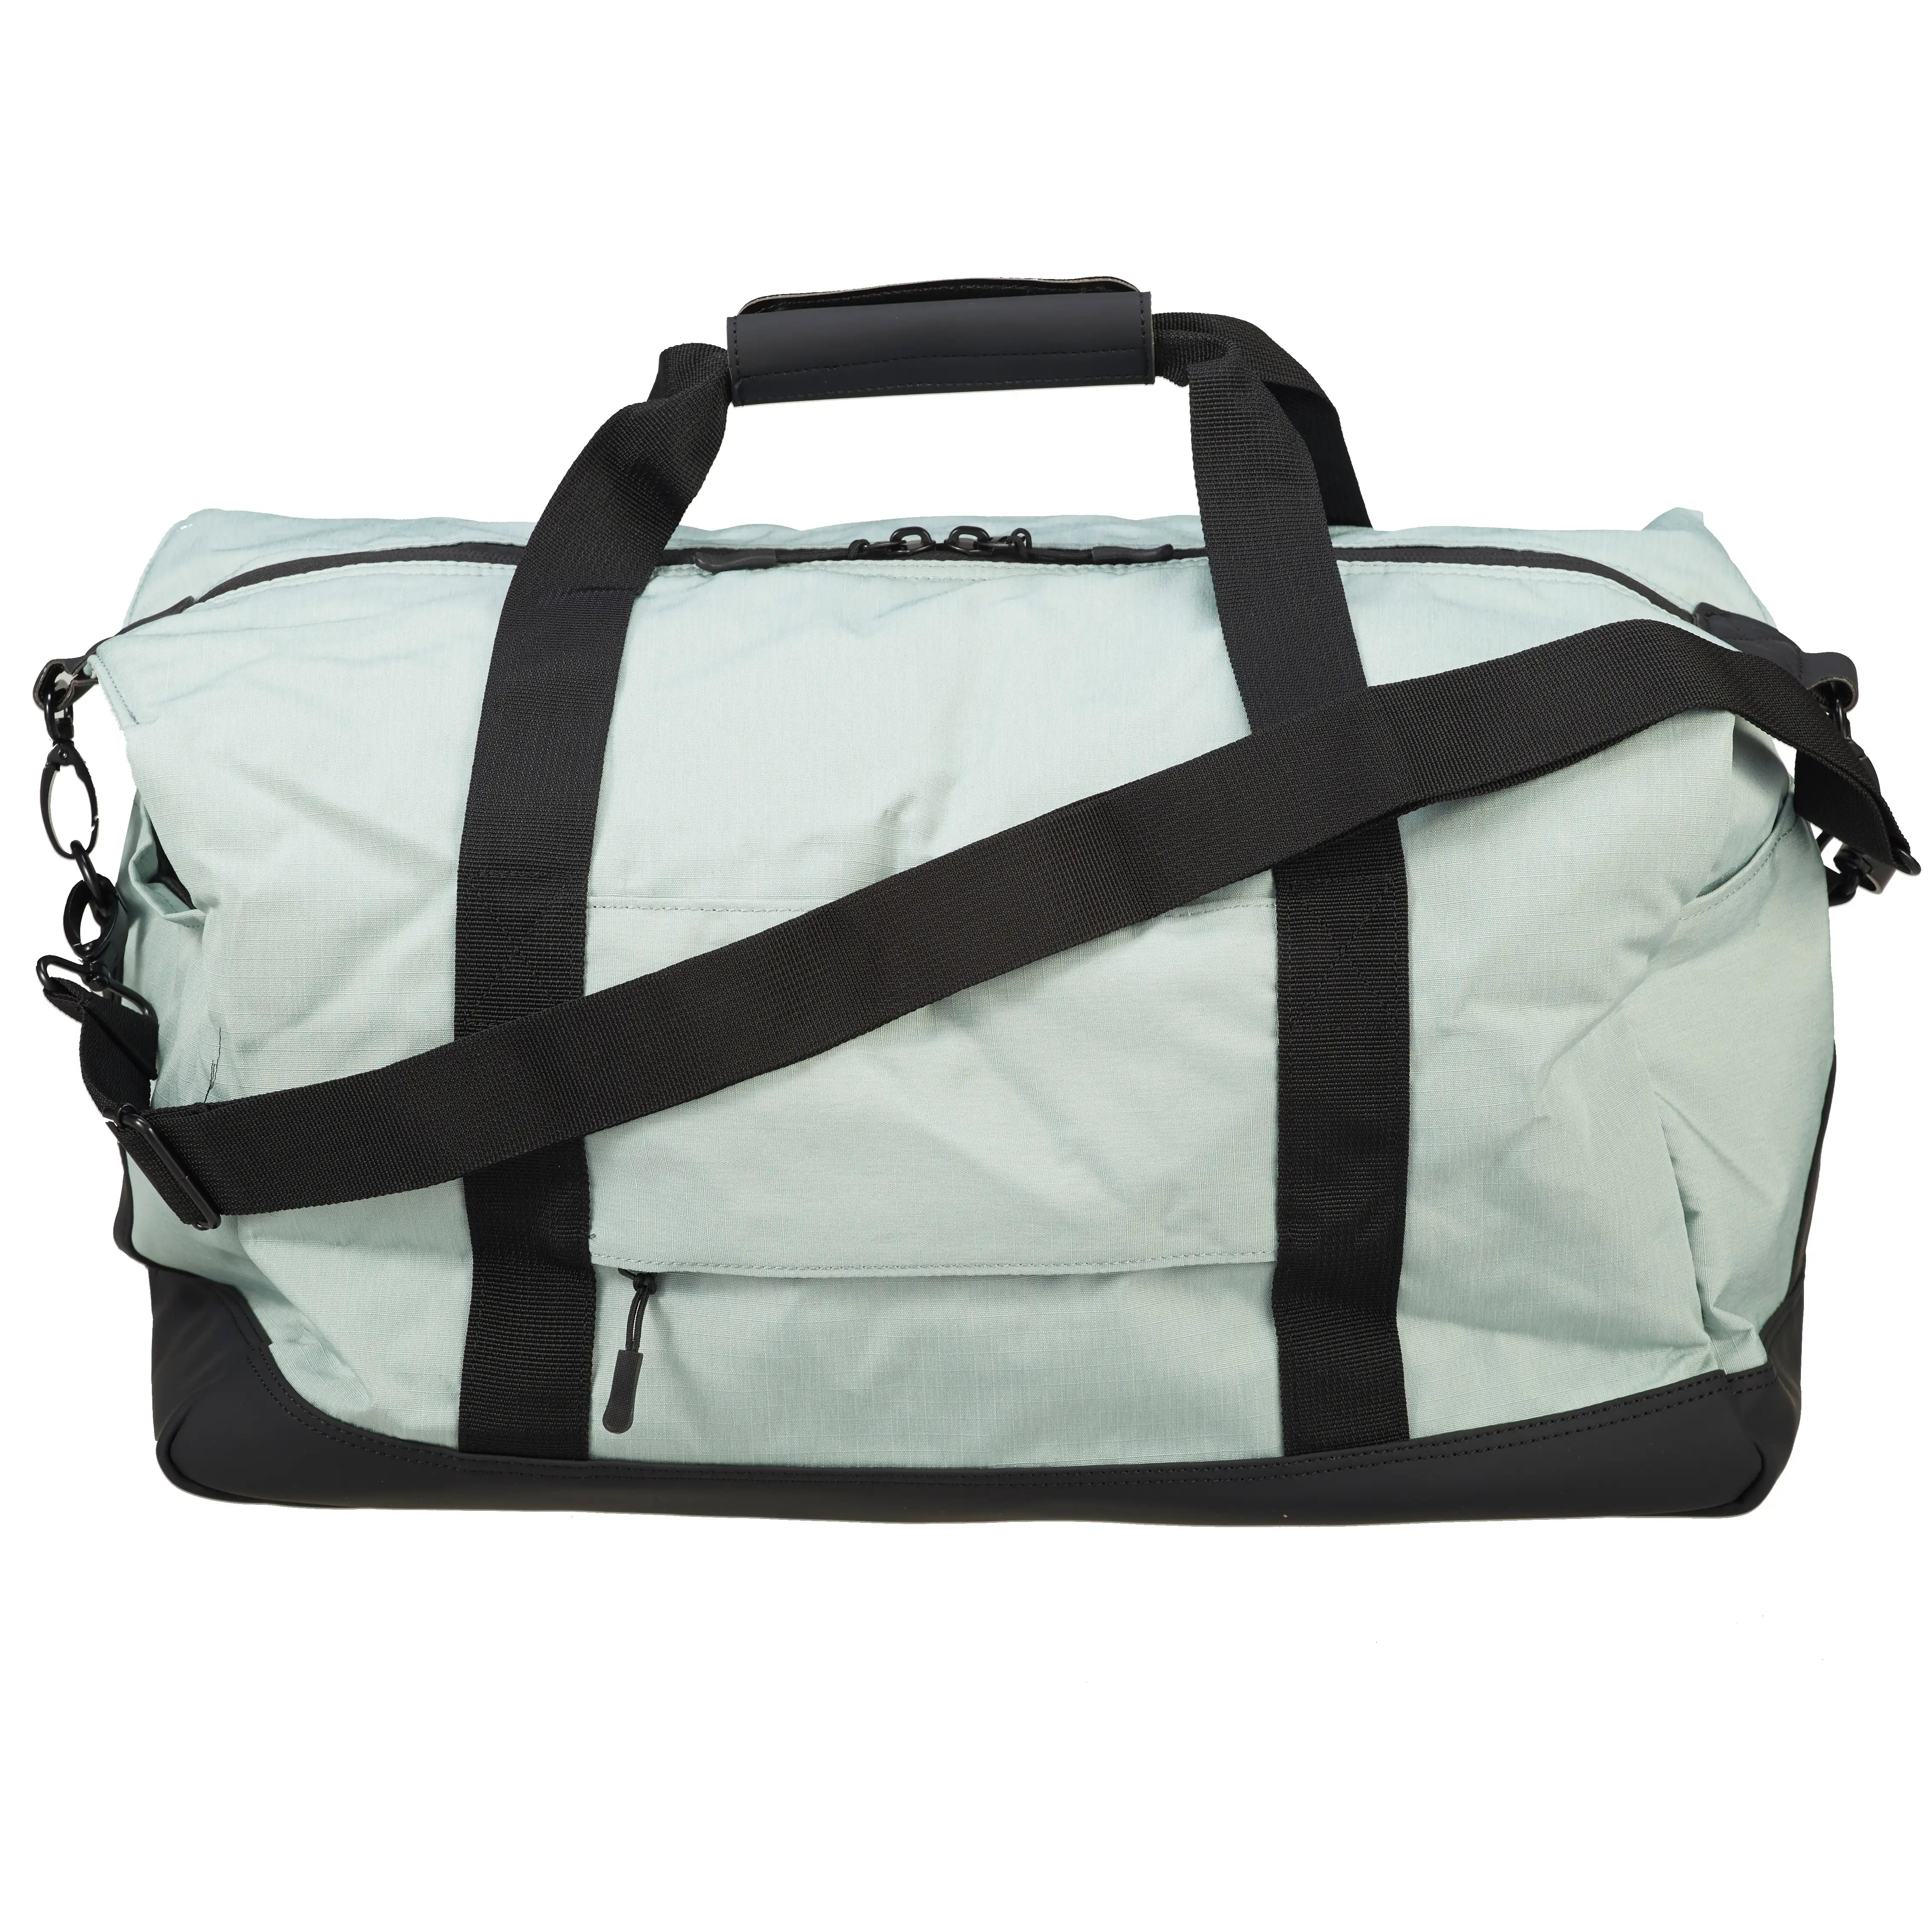 Walker Miami Weekender Travel Bag 48 cm - Anthracite